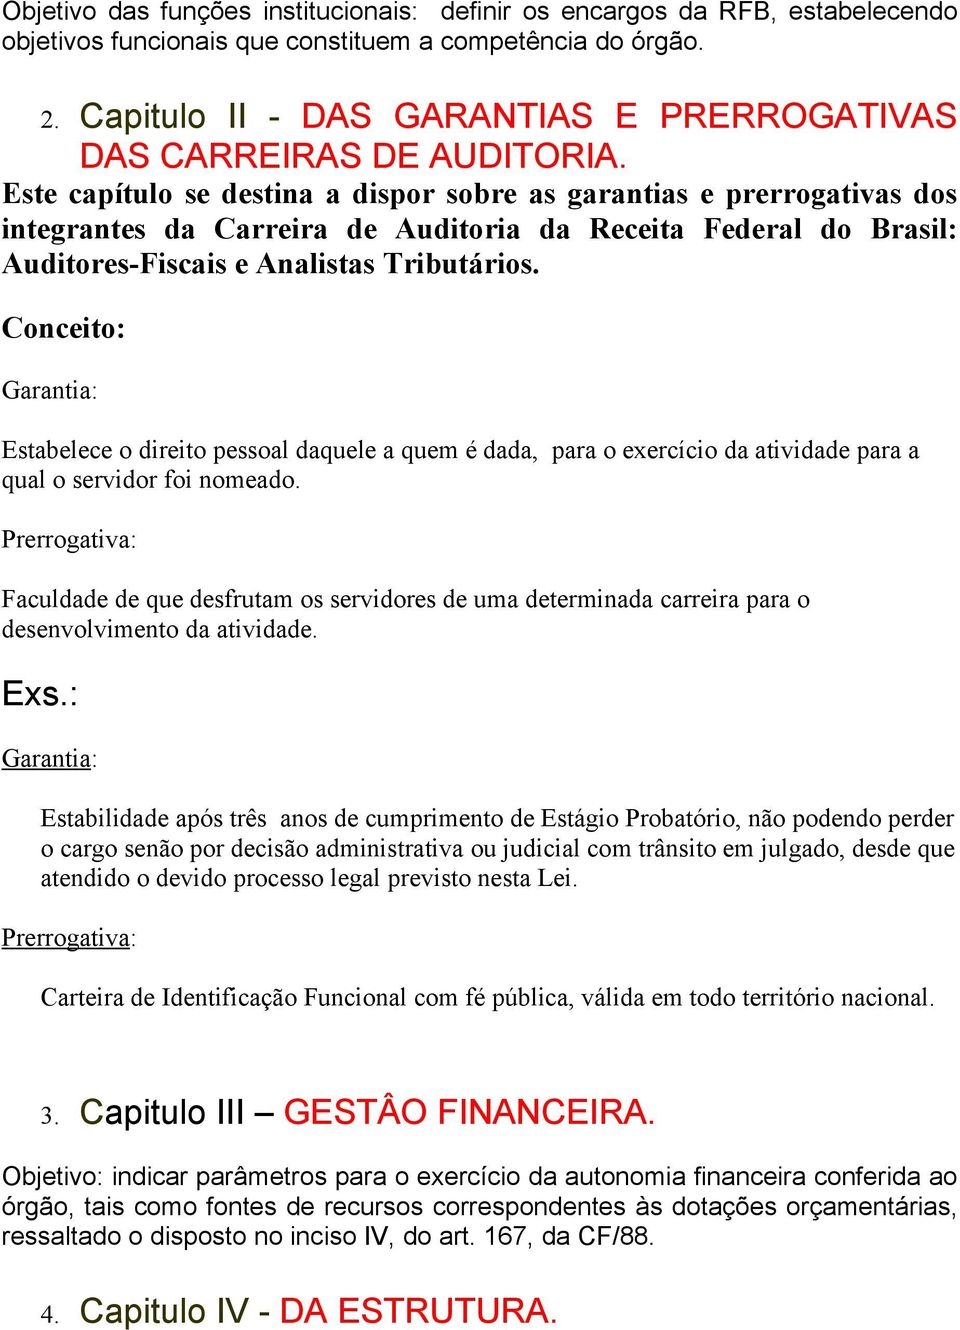 Este capítulo se destina a dispor sobre as garantias e prerrogativas dos integrantes da Carreira de Auditoria da Receita Federal do Brasil: Auditores-Fiscais e Analistas Tributários.